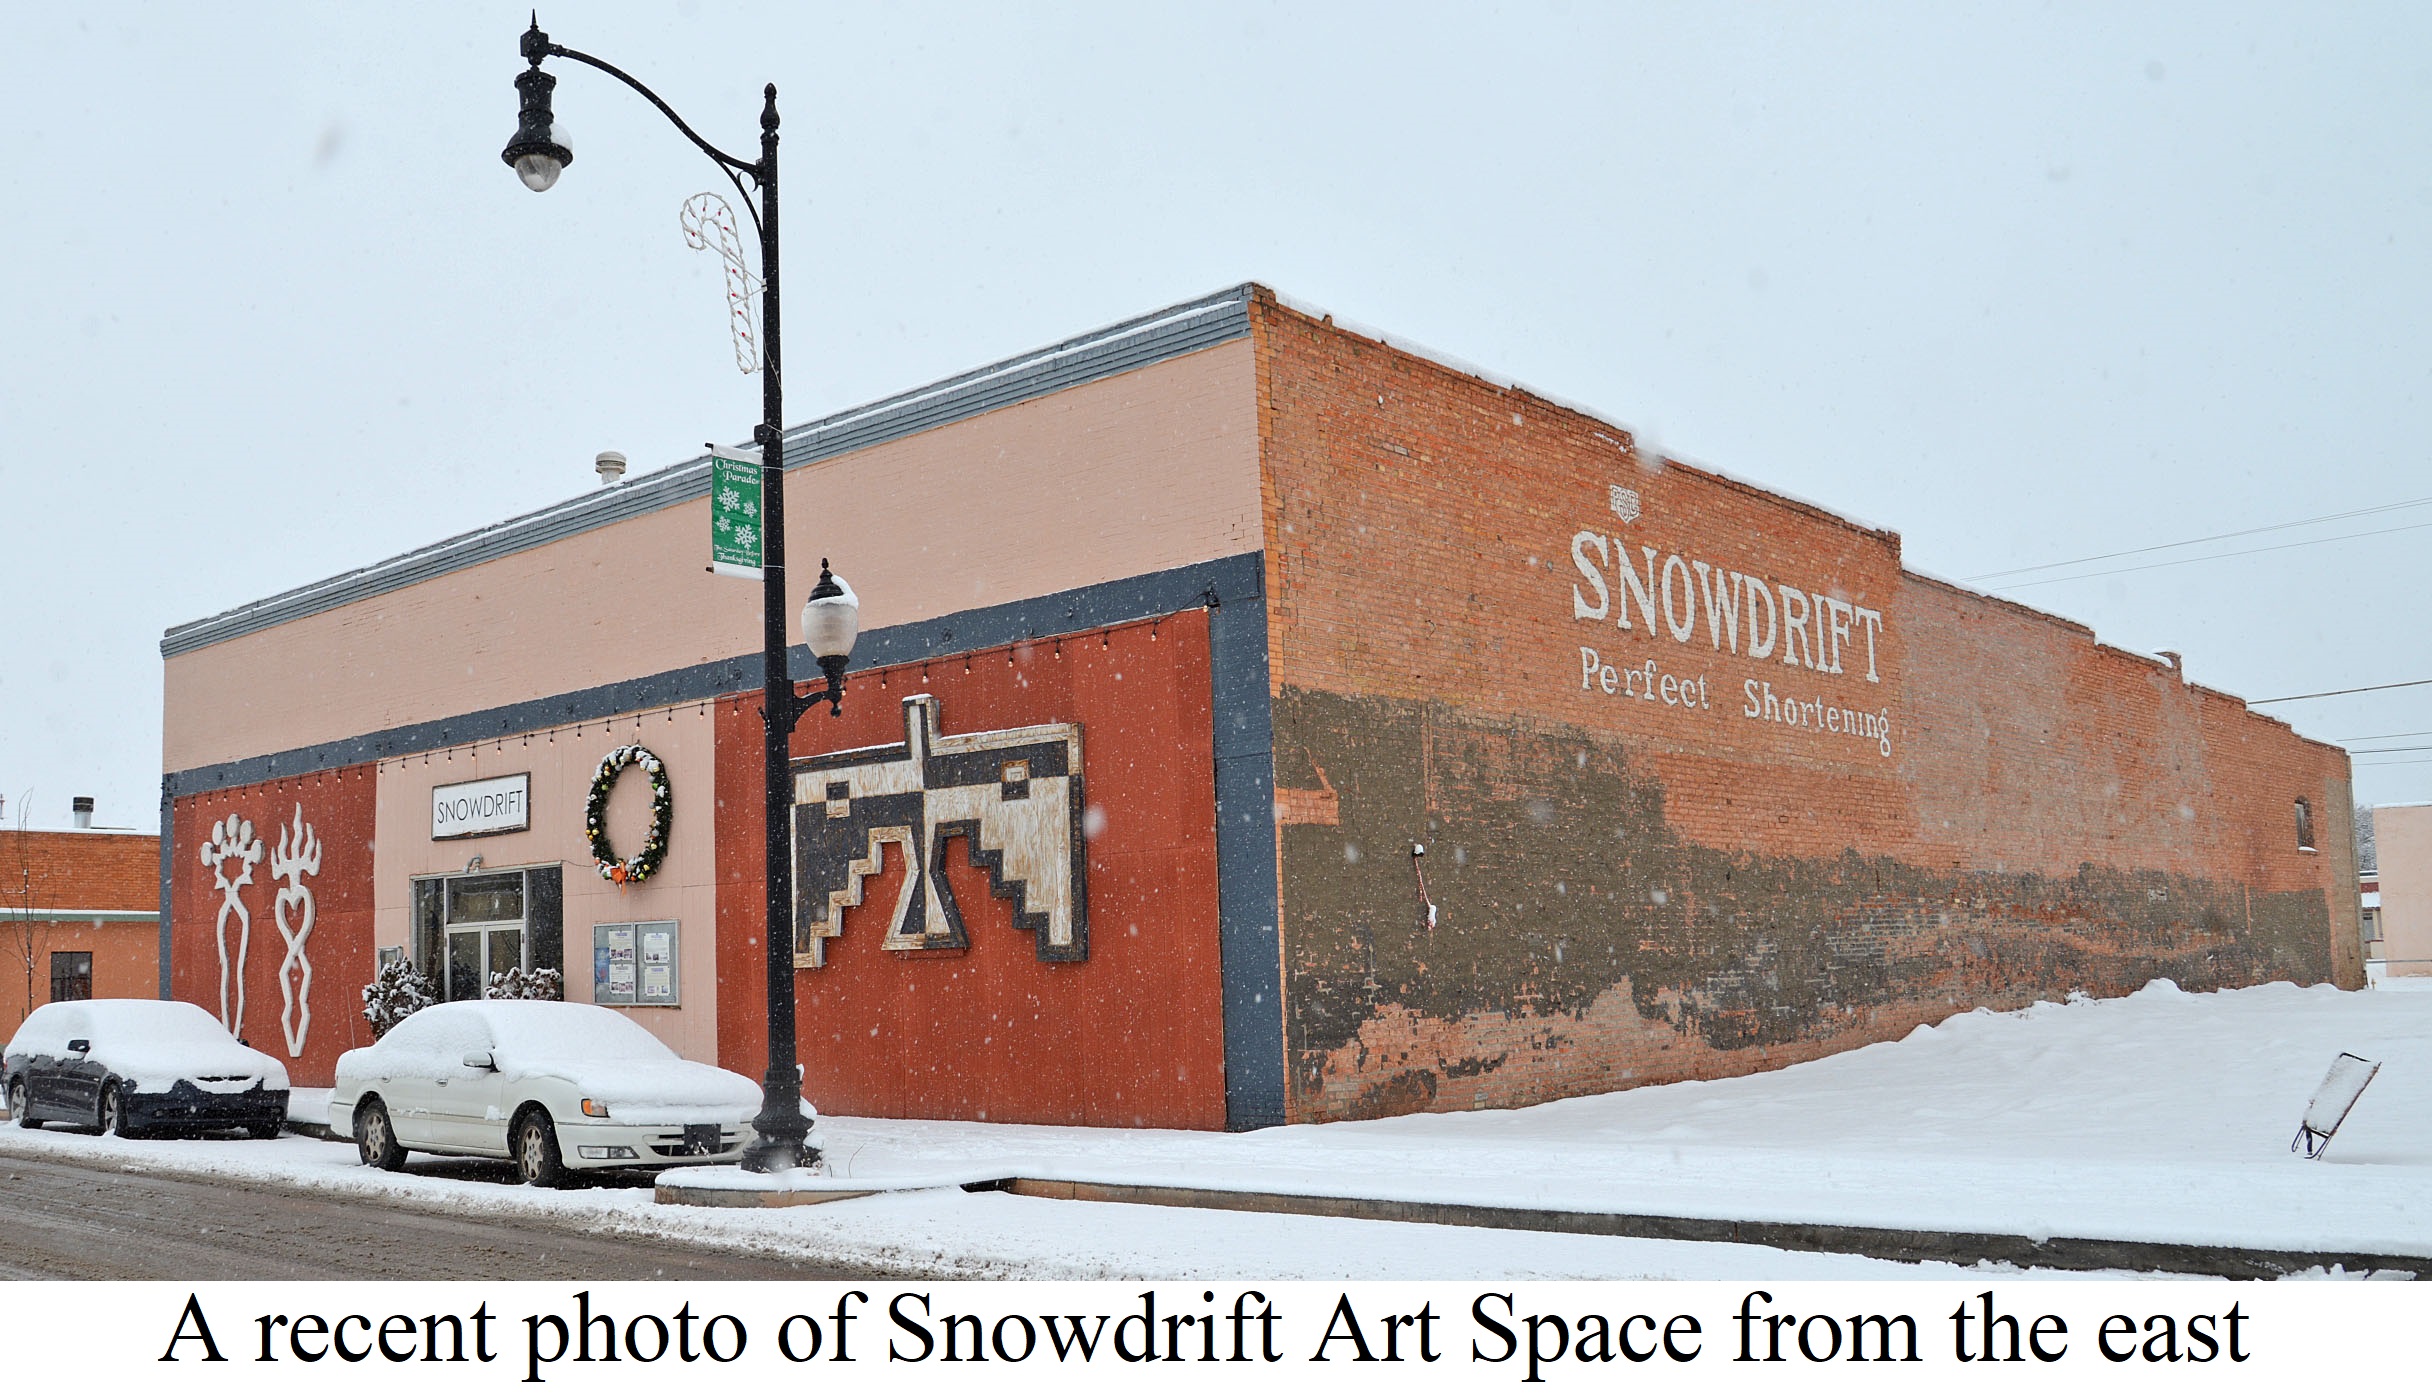 Snowdrift Art Space in the former Babbitt's Department Store